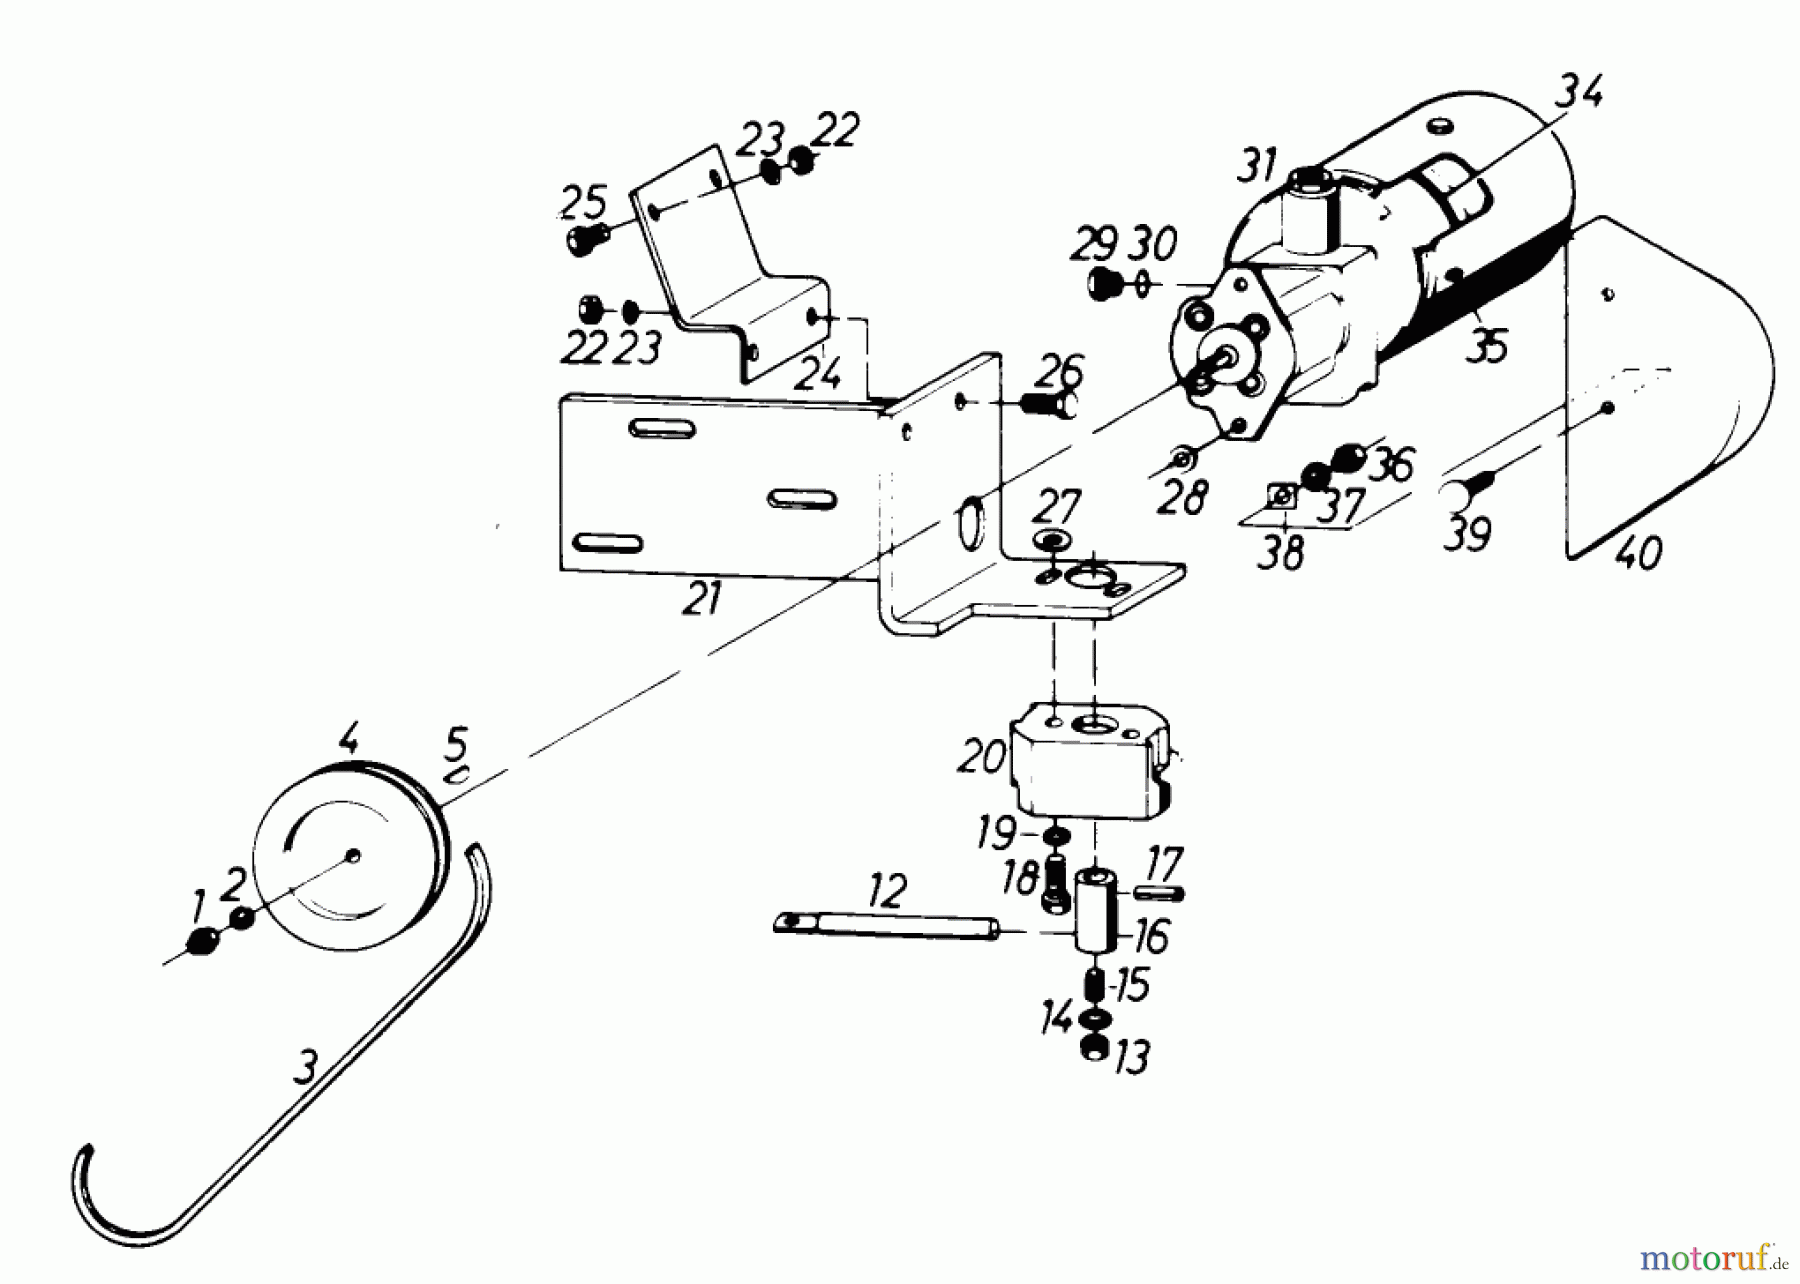  Toro Neu Mowers, Lawn & Garden Tractor Seite 1 61-20RG01 (D-250) - Toro D-250 10-Speed Tractor, 1976 HYDRAULIC UNIT